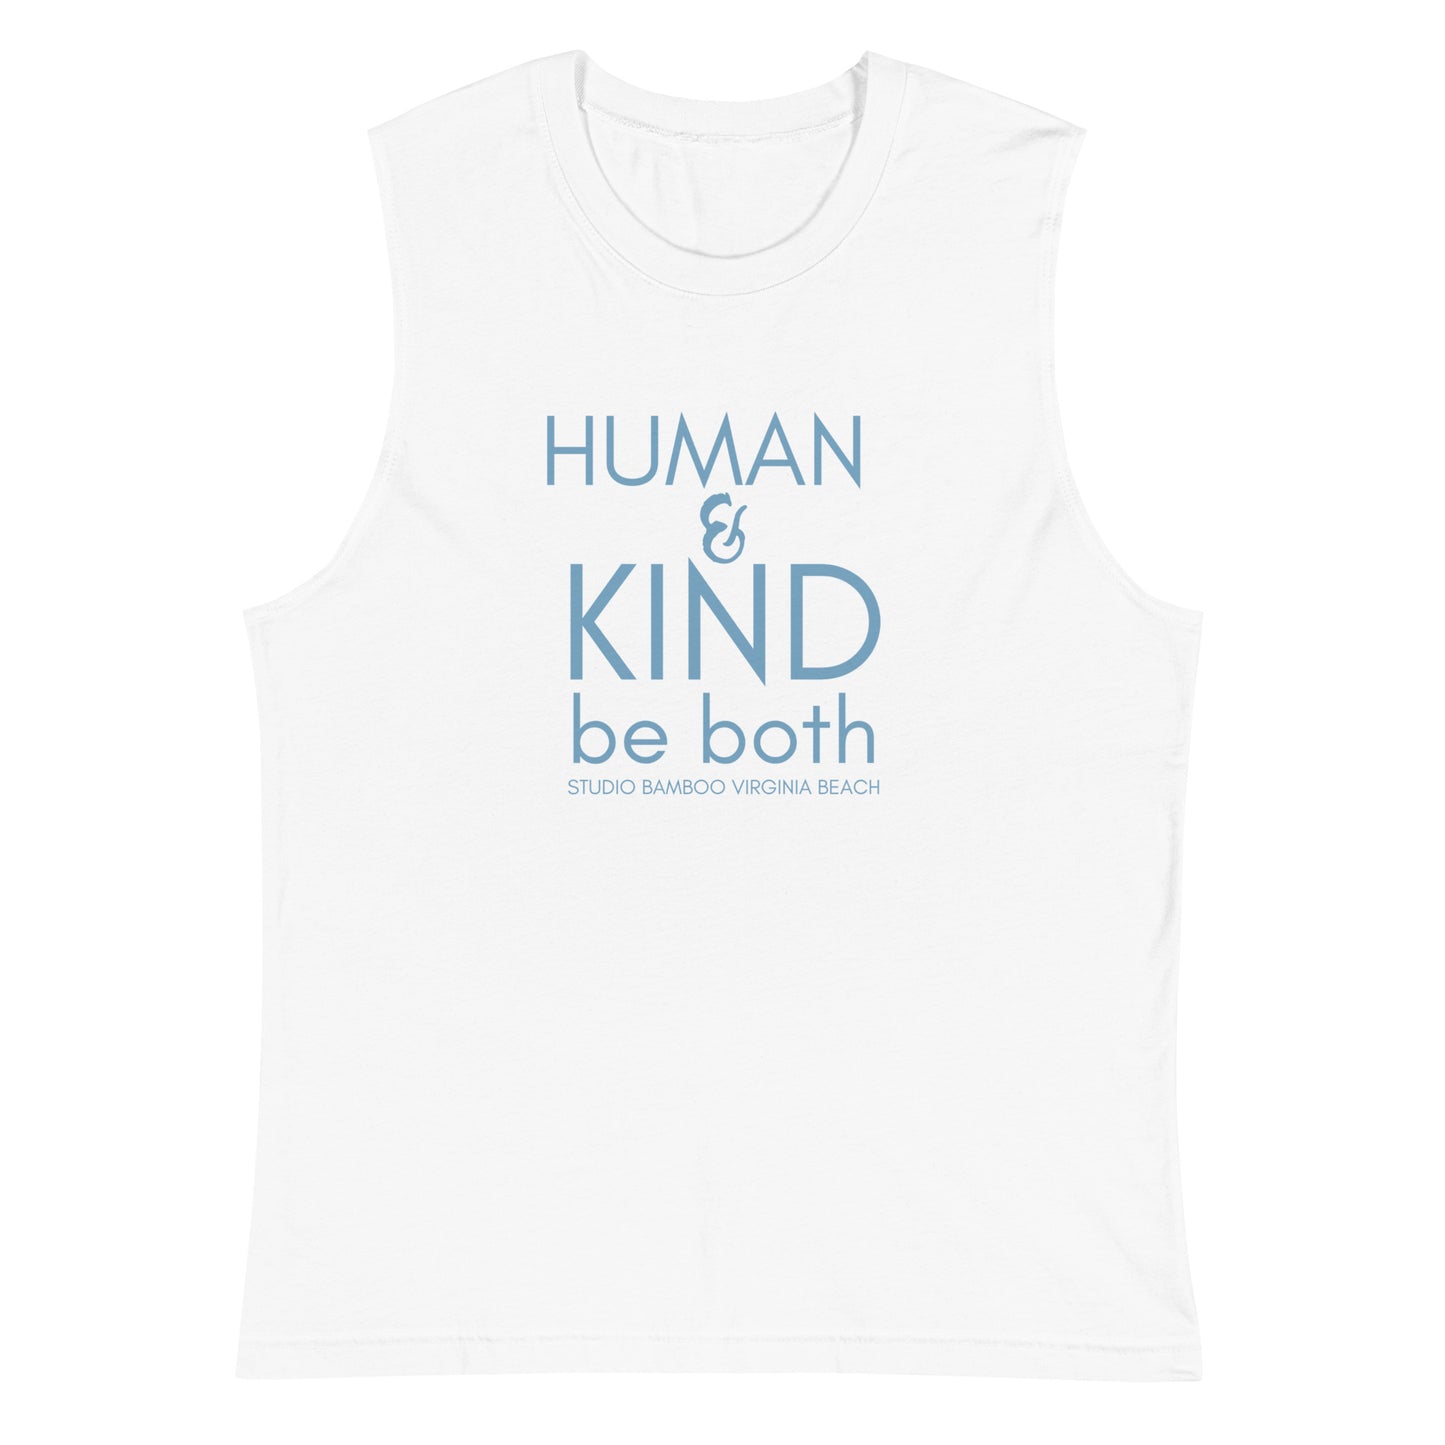 Human & Kind Muscle Shirt